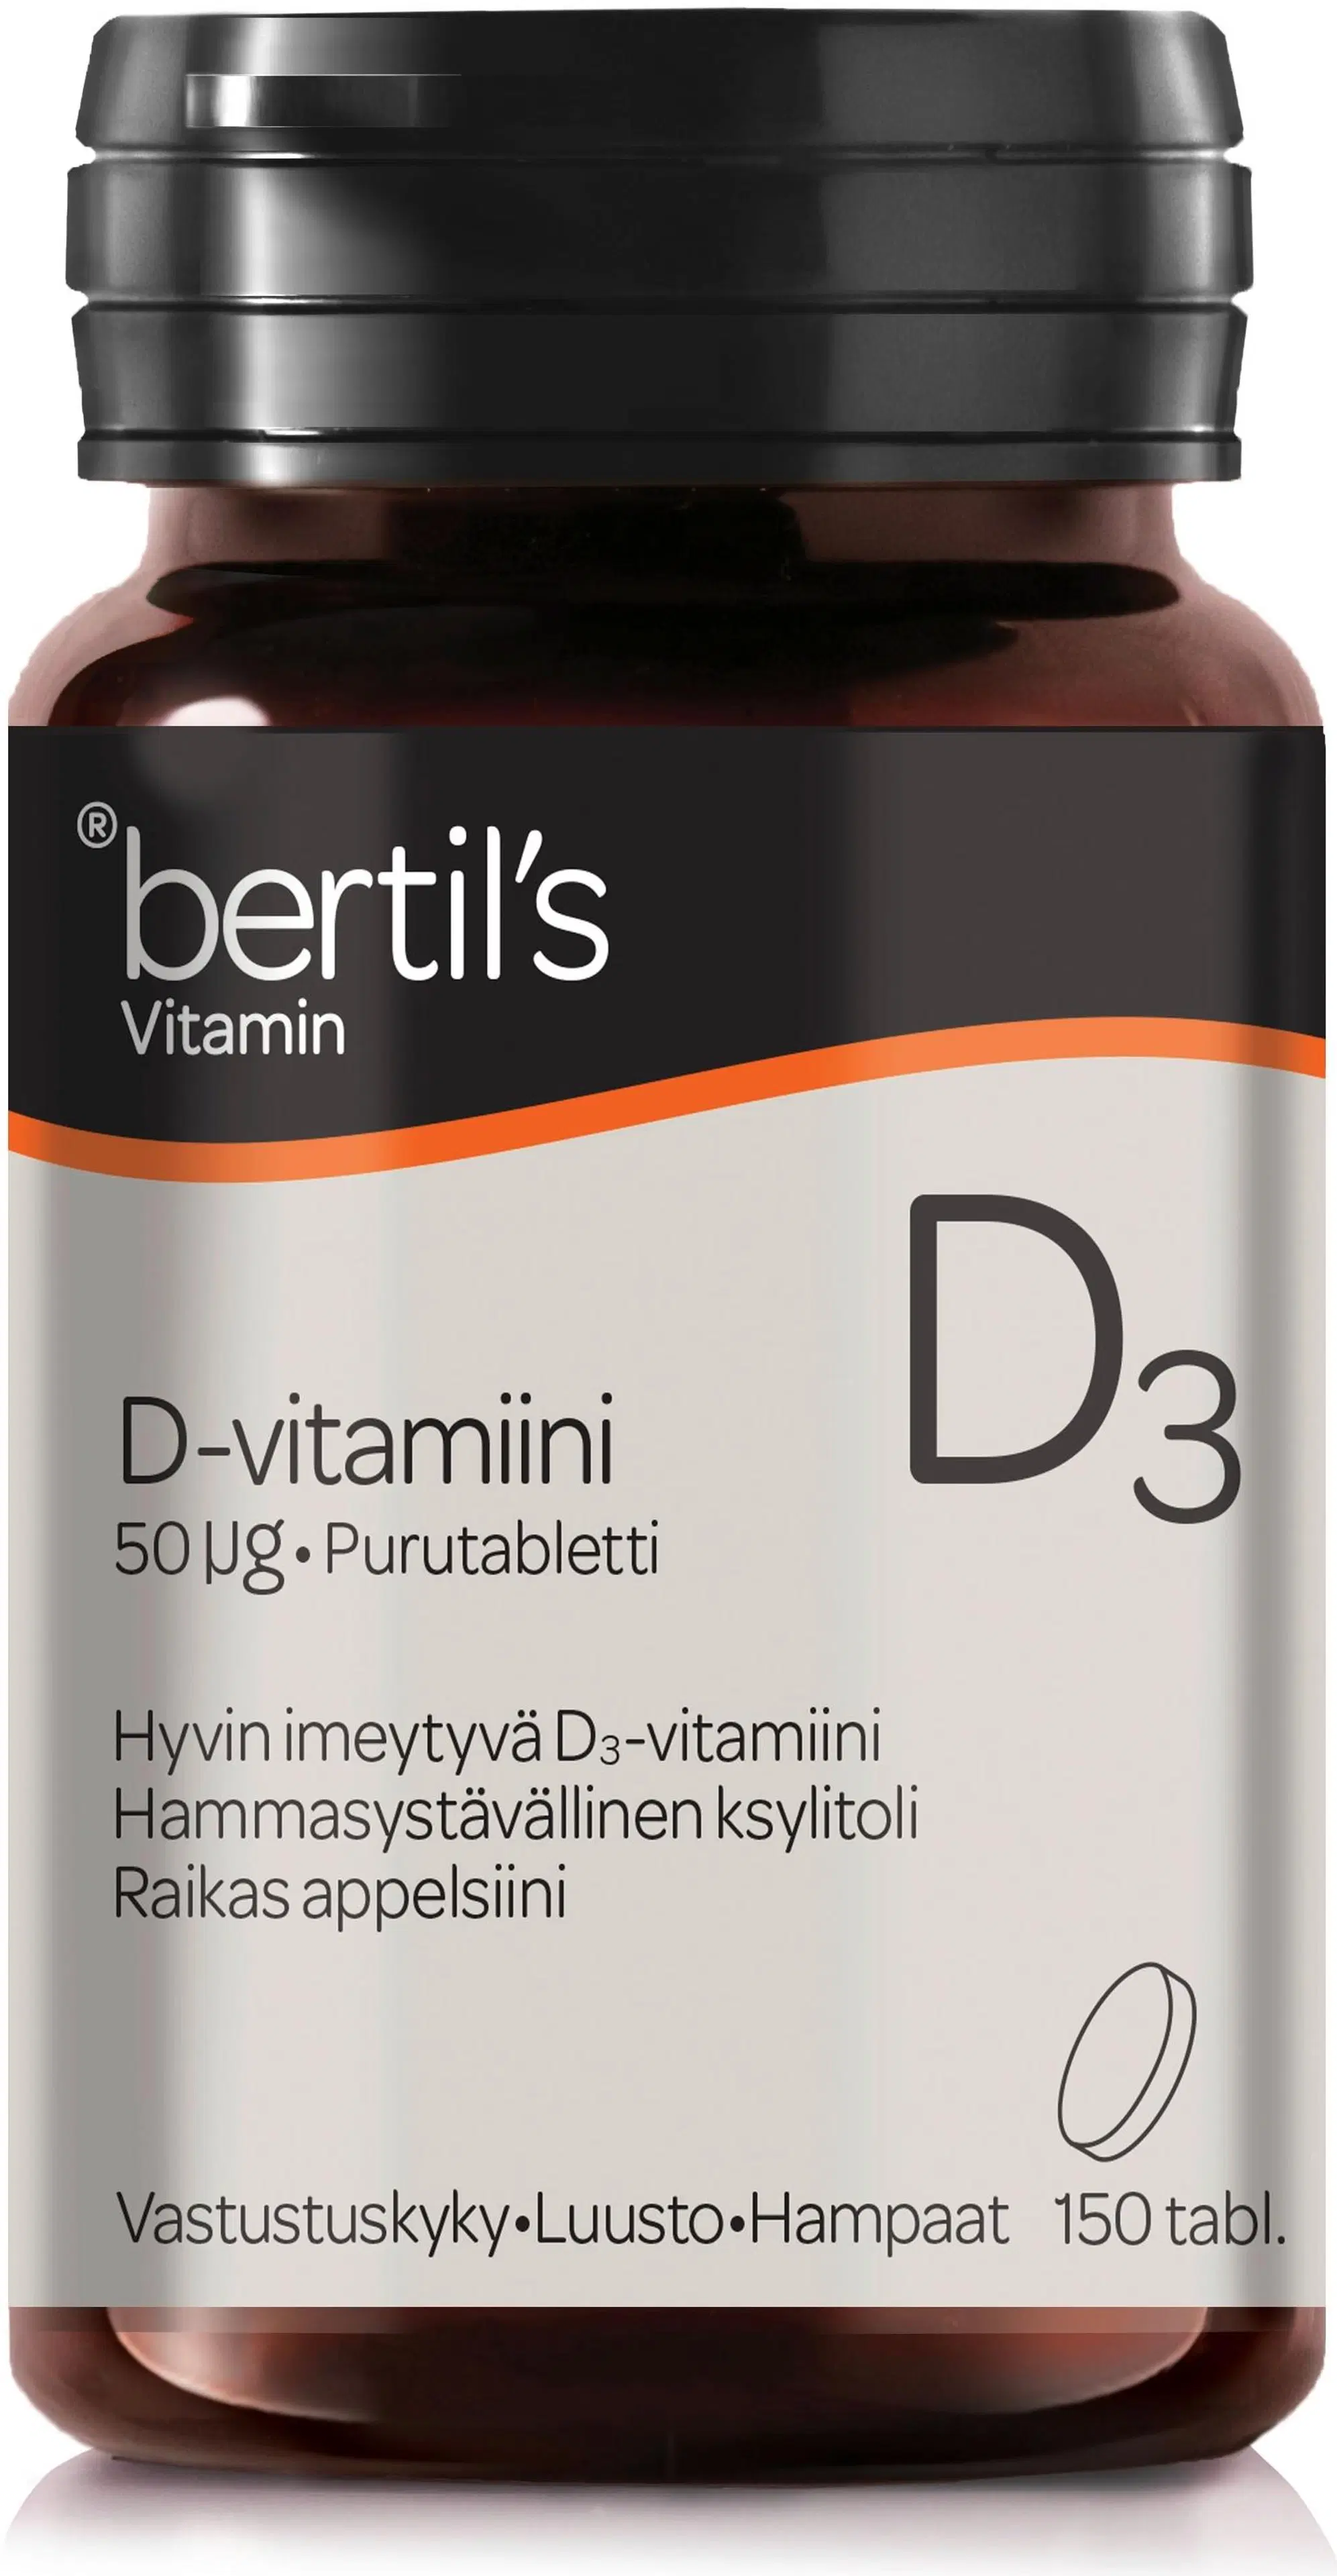 bertil's D3-vitamiini 50 mcg 150 tabl.